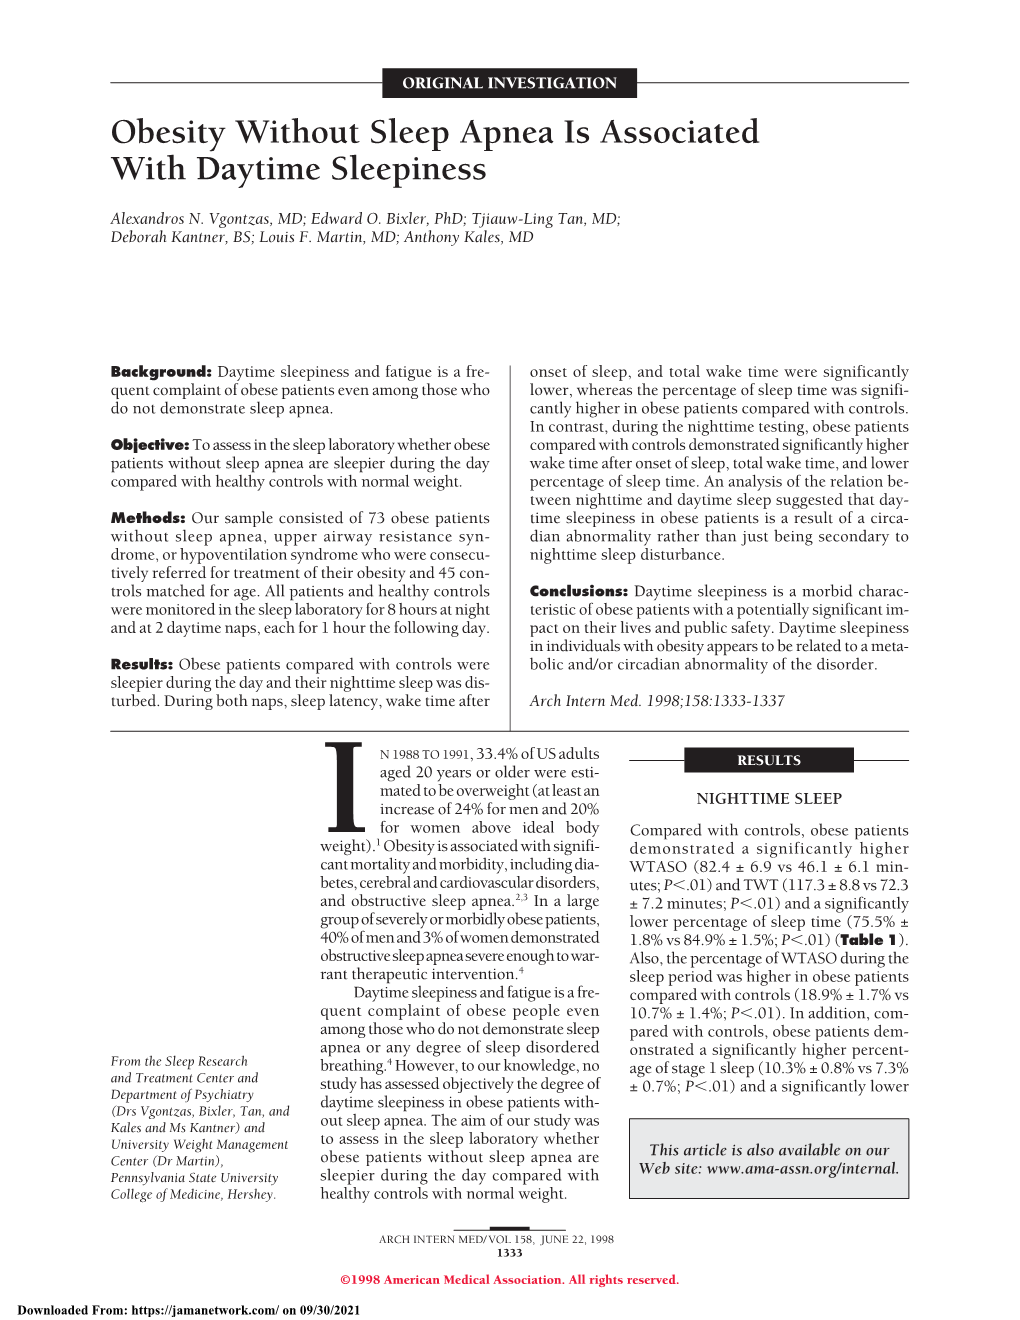 Obesity Without Sleep Apnea Is Associated with Daytime Sleepiness